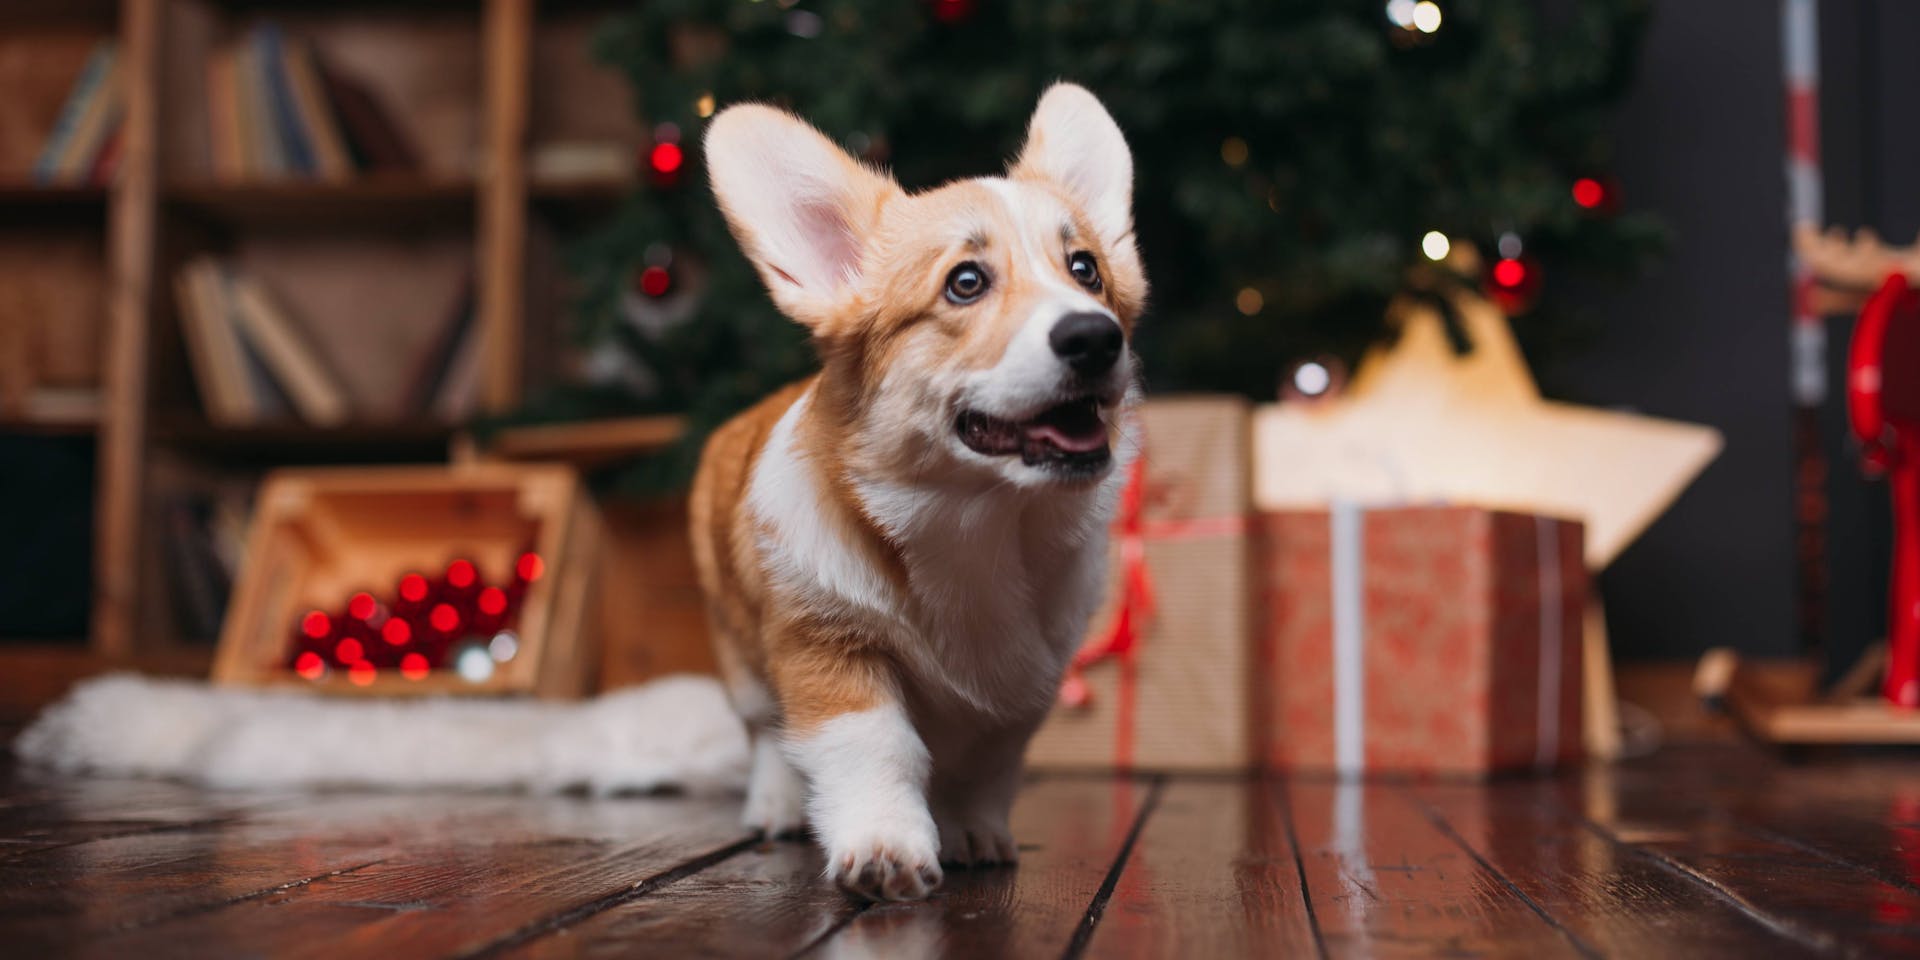 Dog walking beside a Christmas tree